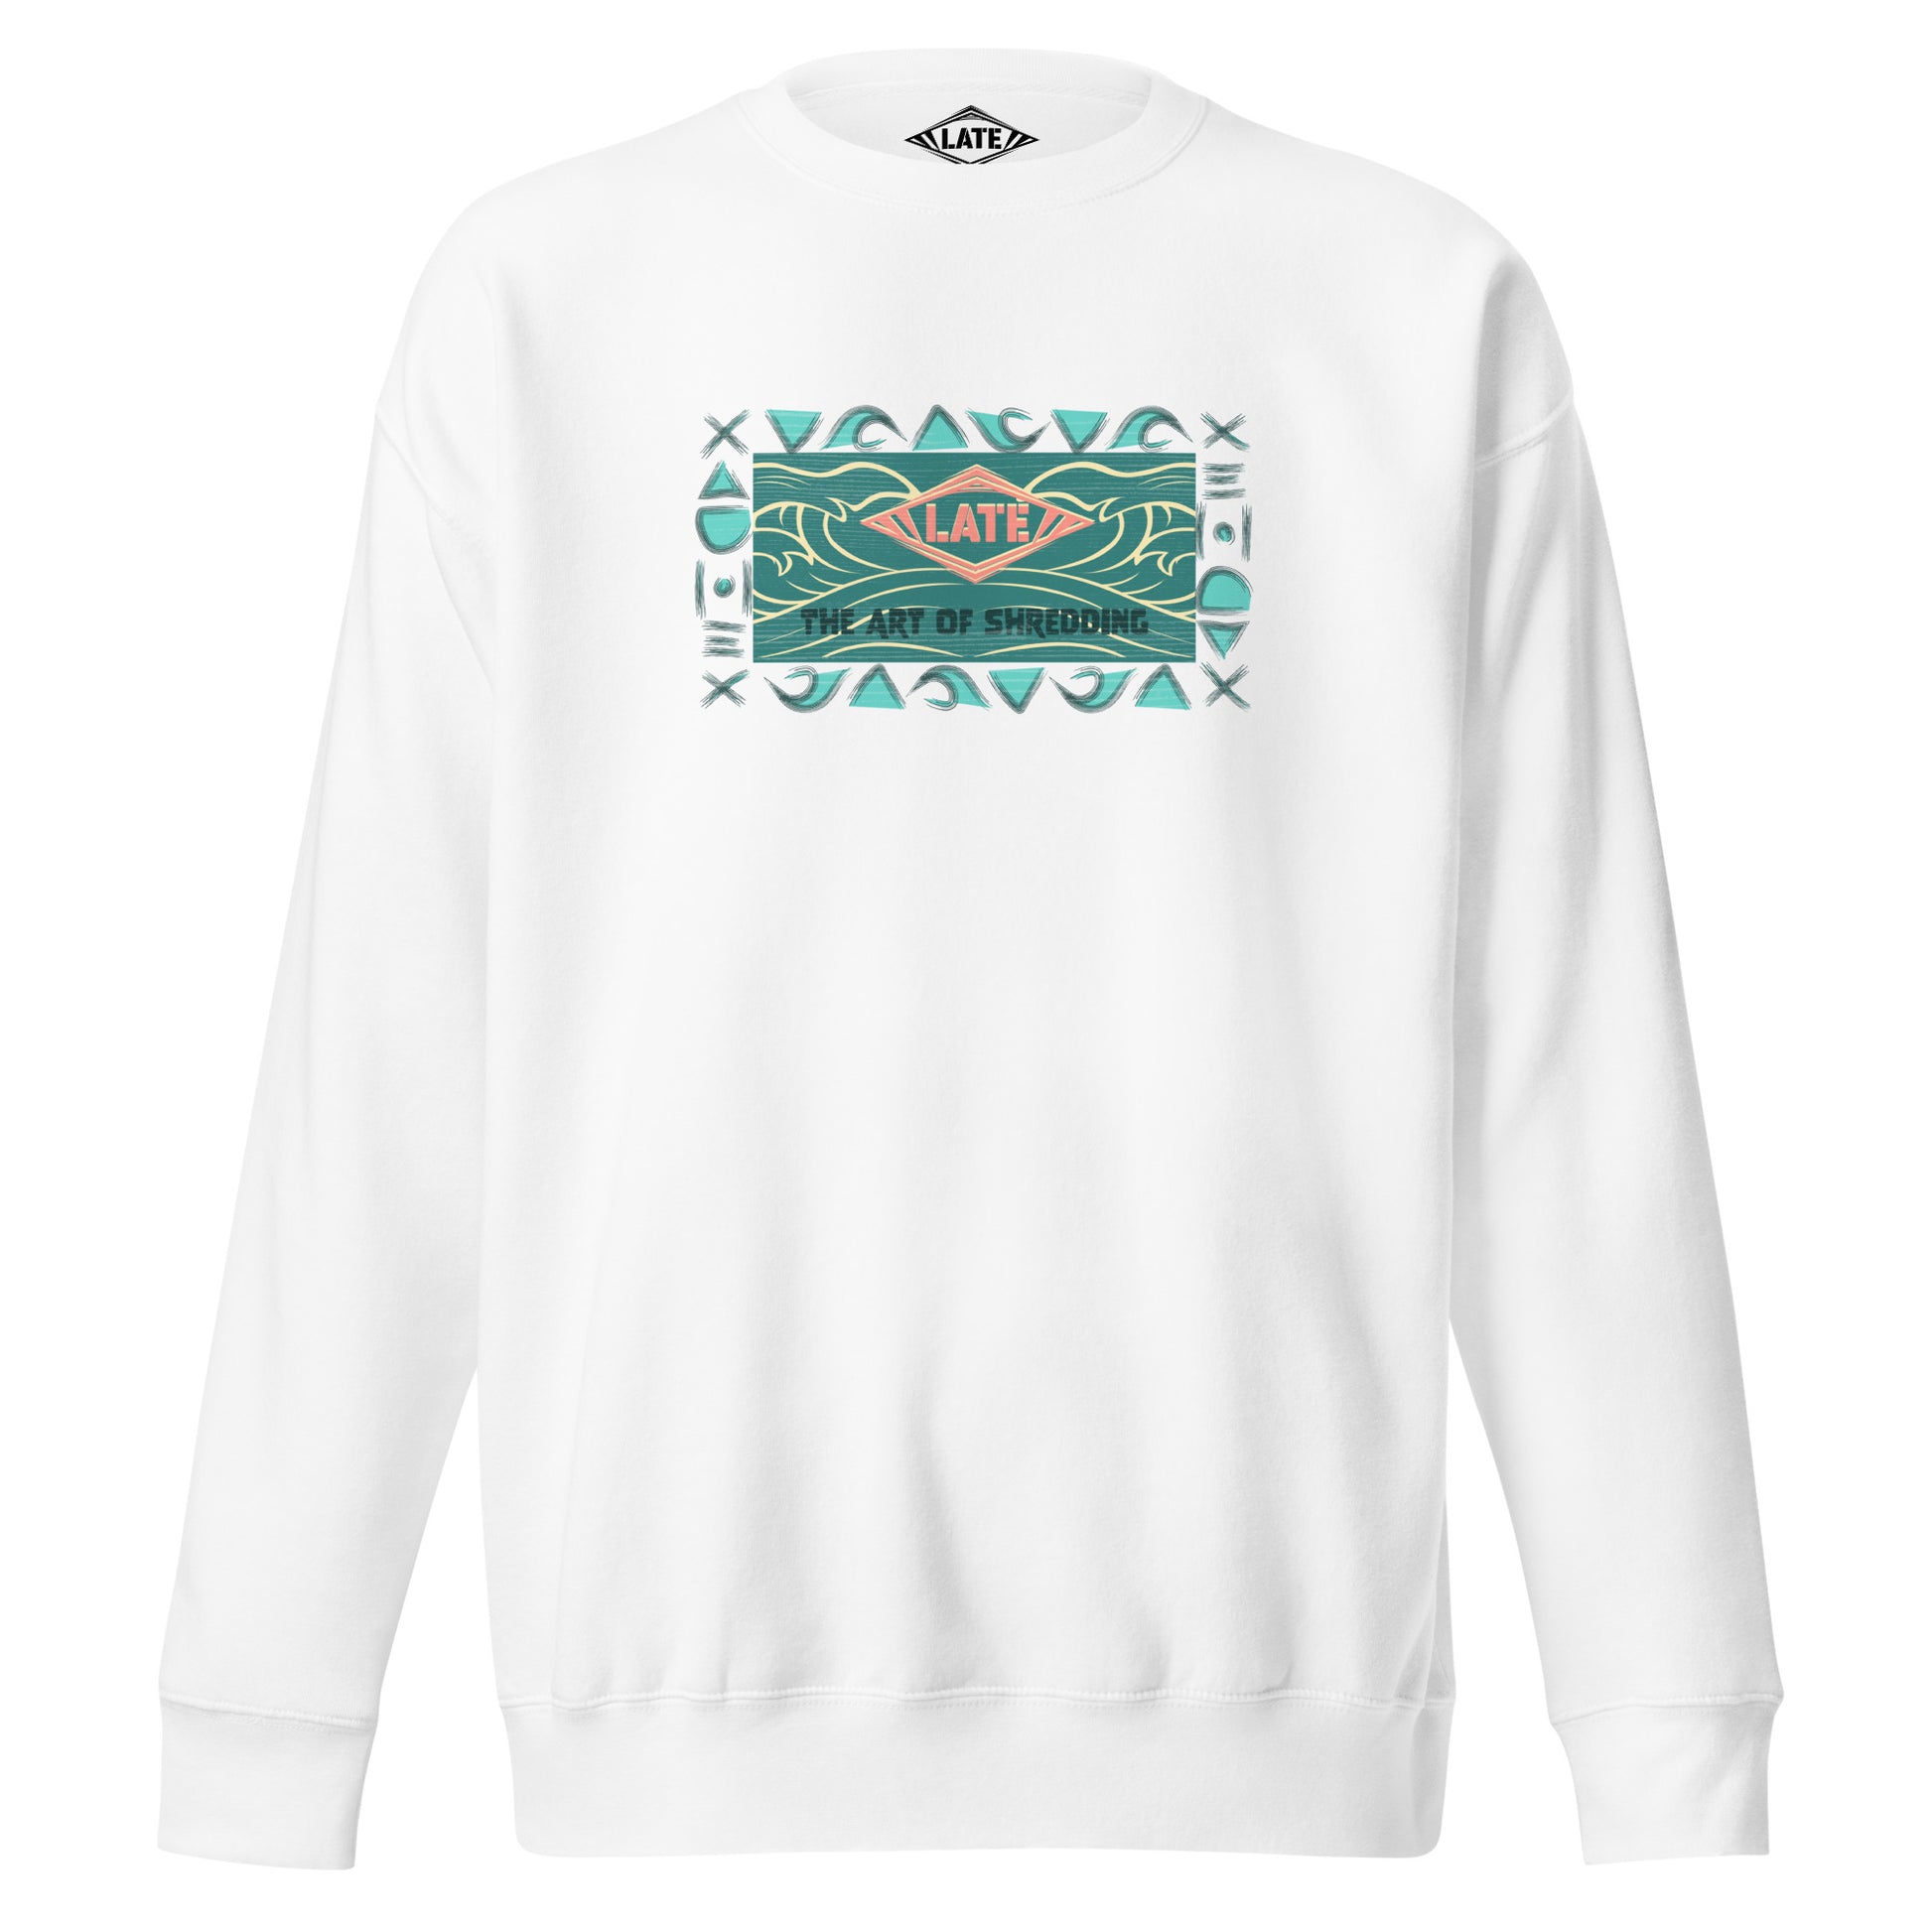 Pull vintage art of shredding, motifs hawaïen vagues, et océan avec le logo surfshop Late, sweatshirt unisex blanc